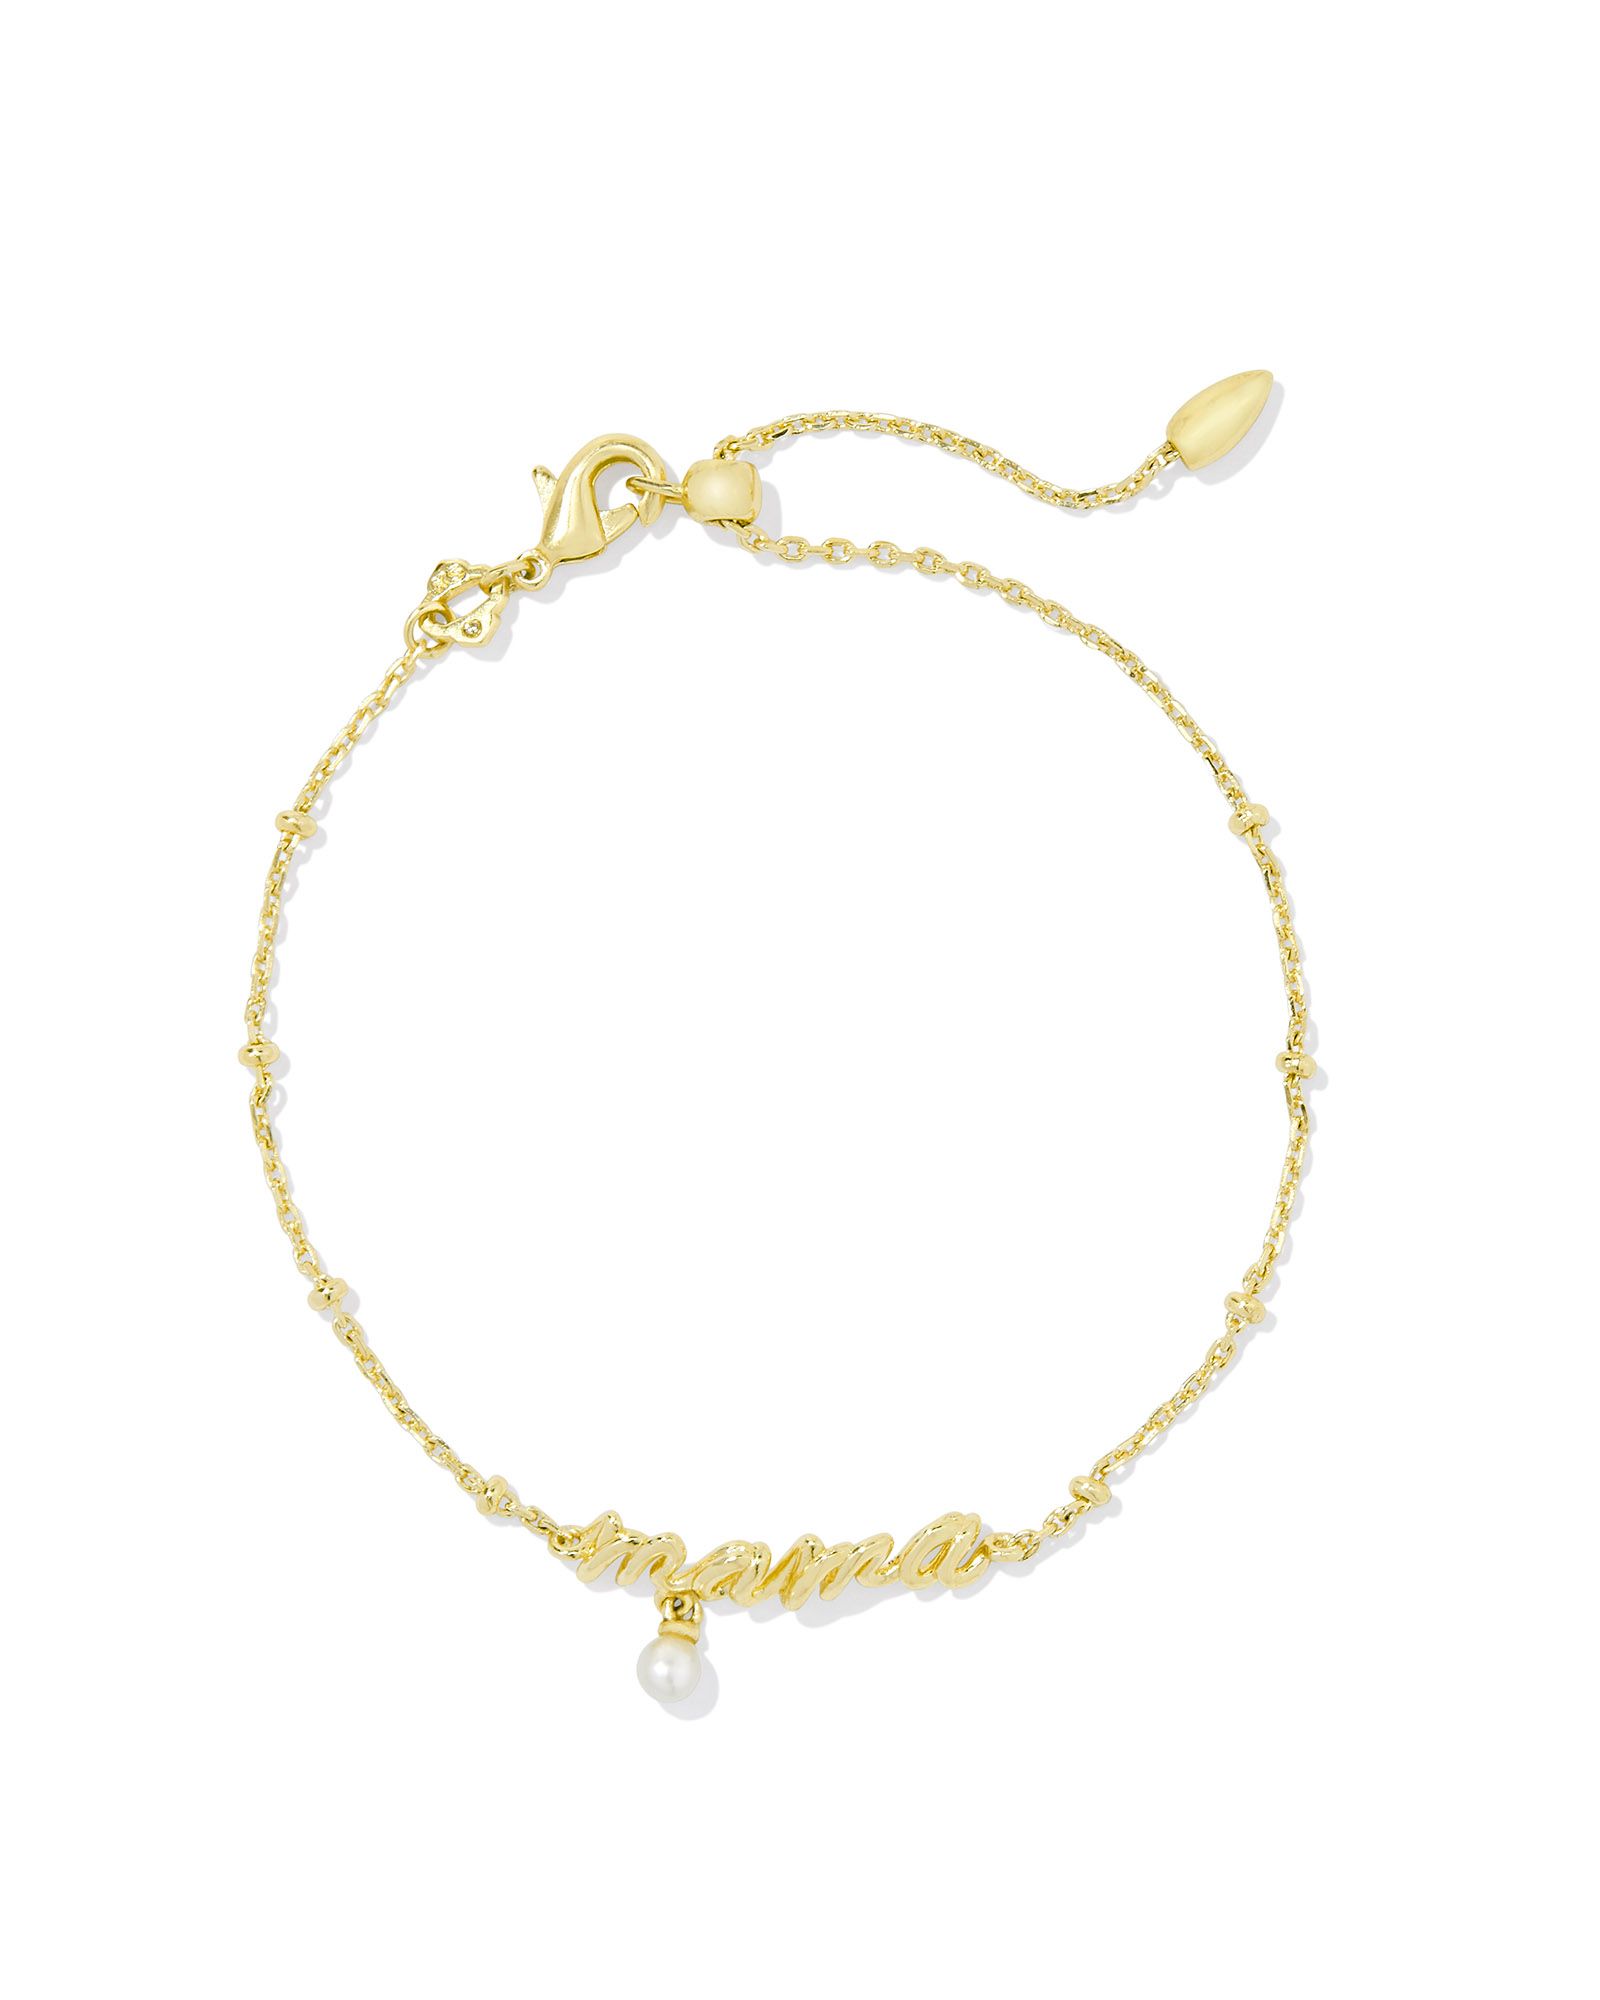 Mama Script Delicate Chain Bracelet in Gold | Kendra Scott | Kendra Scott